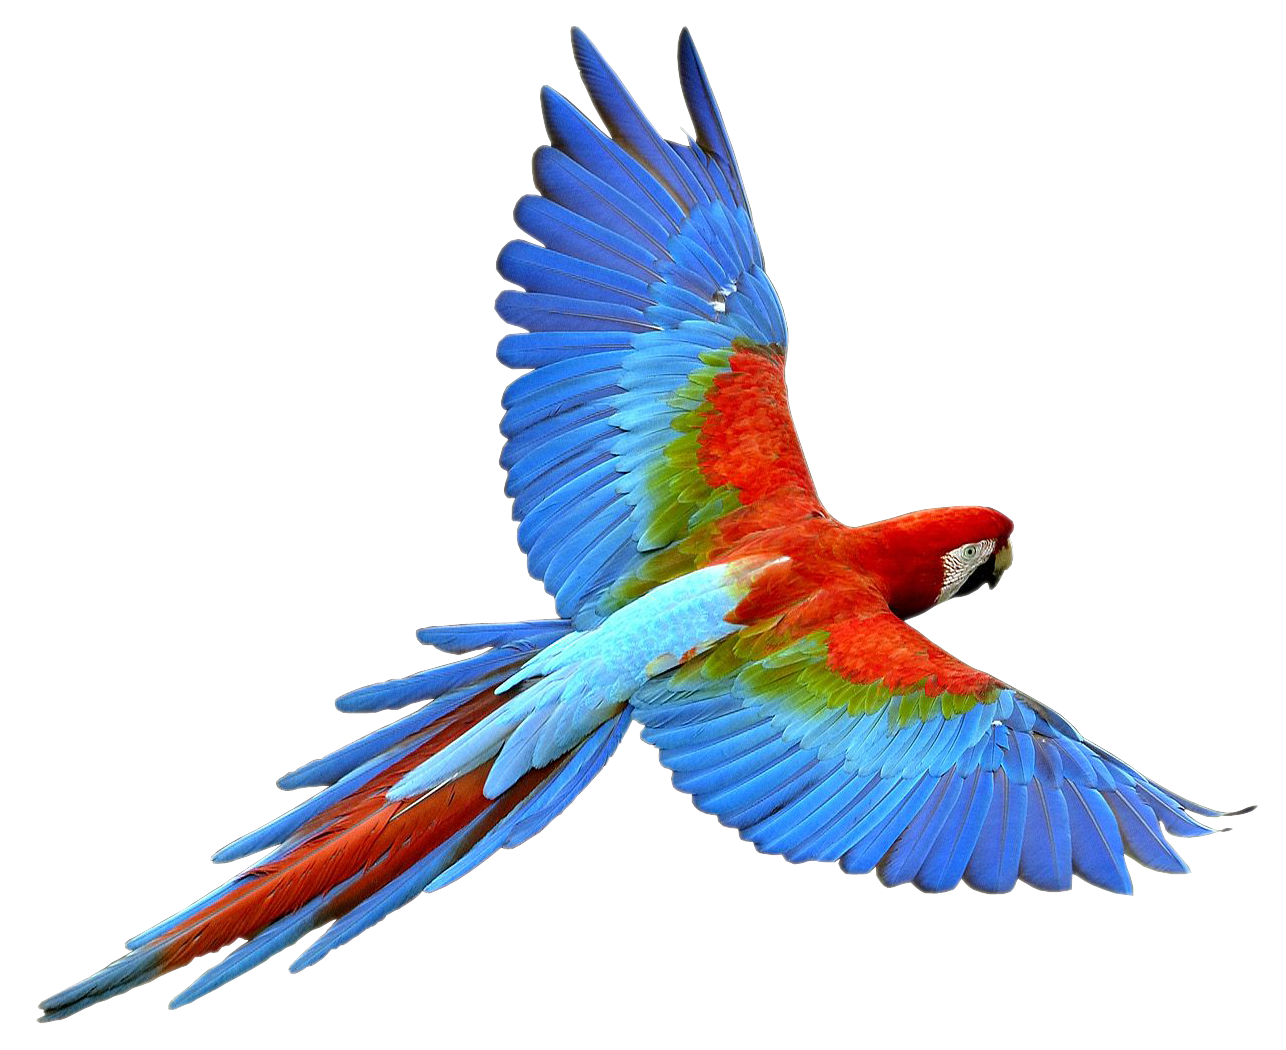 Uçan papağan PNG şeffaf görüntü